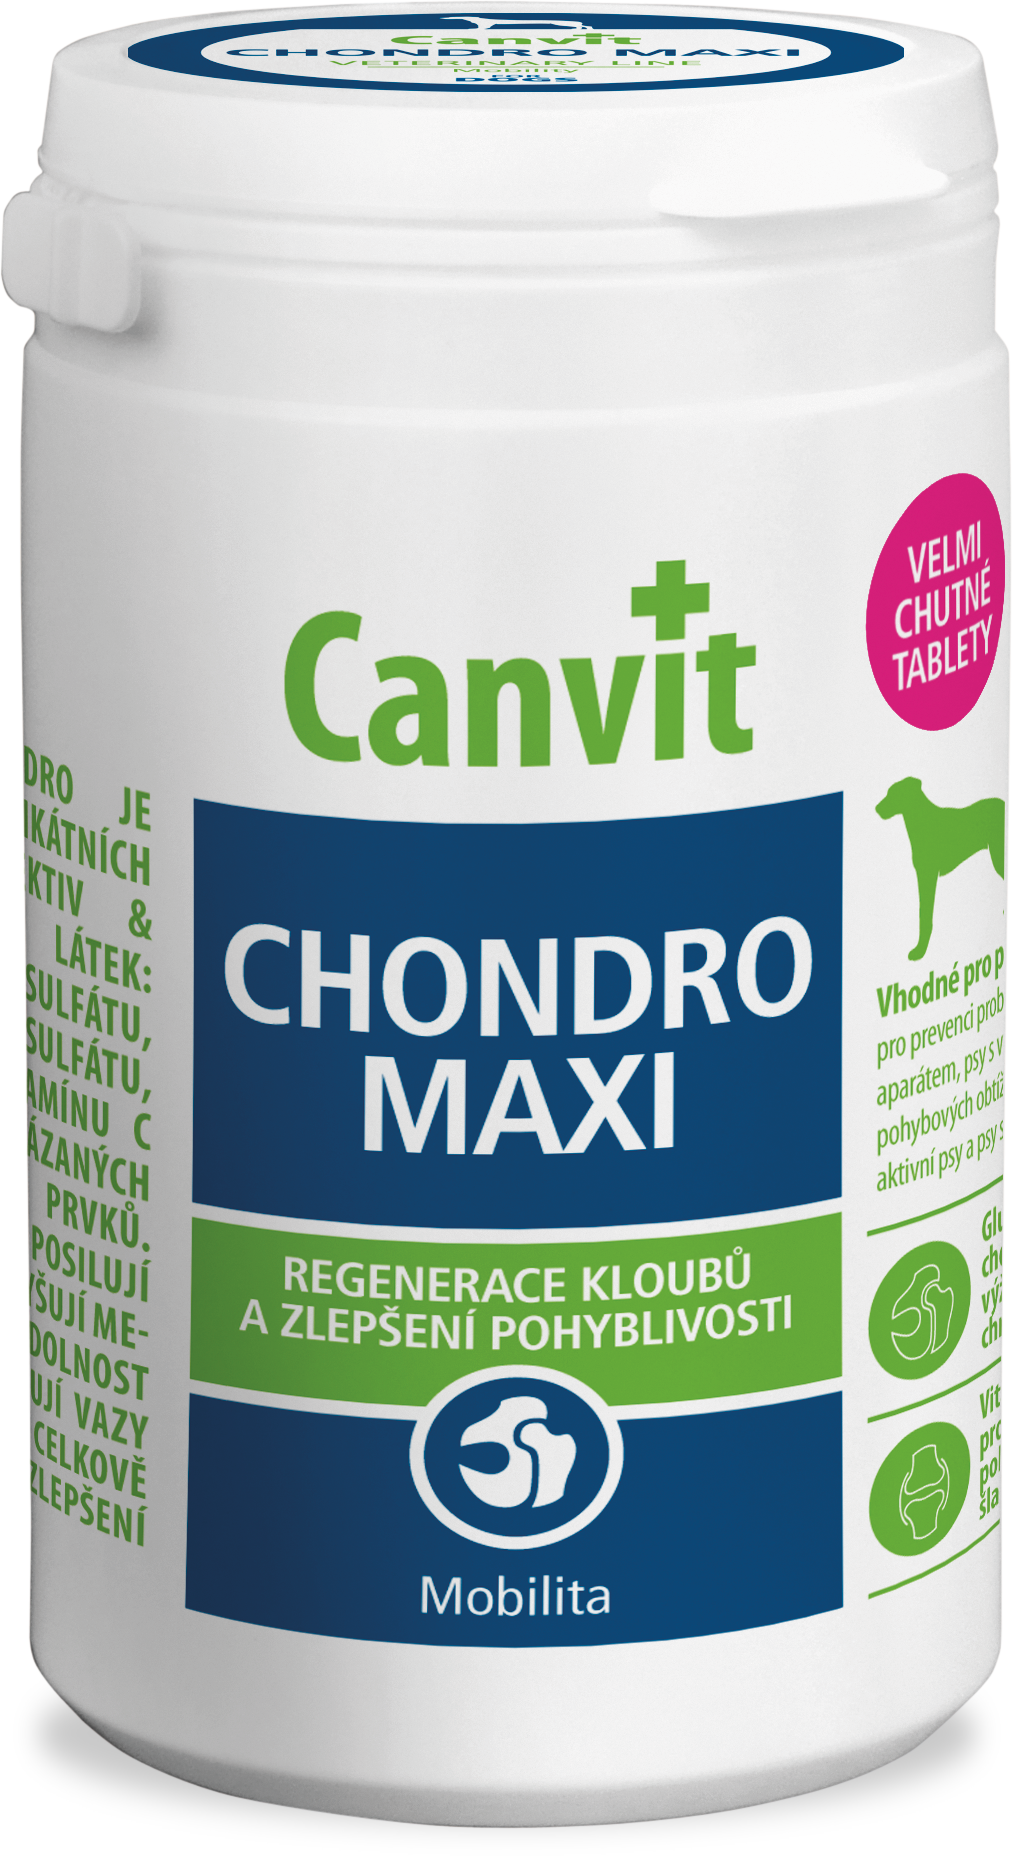 Canvit Chondro Maxi - Kliknutím zobrazíte detail obrázku.